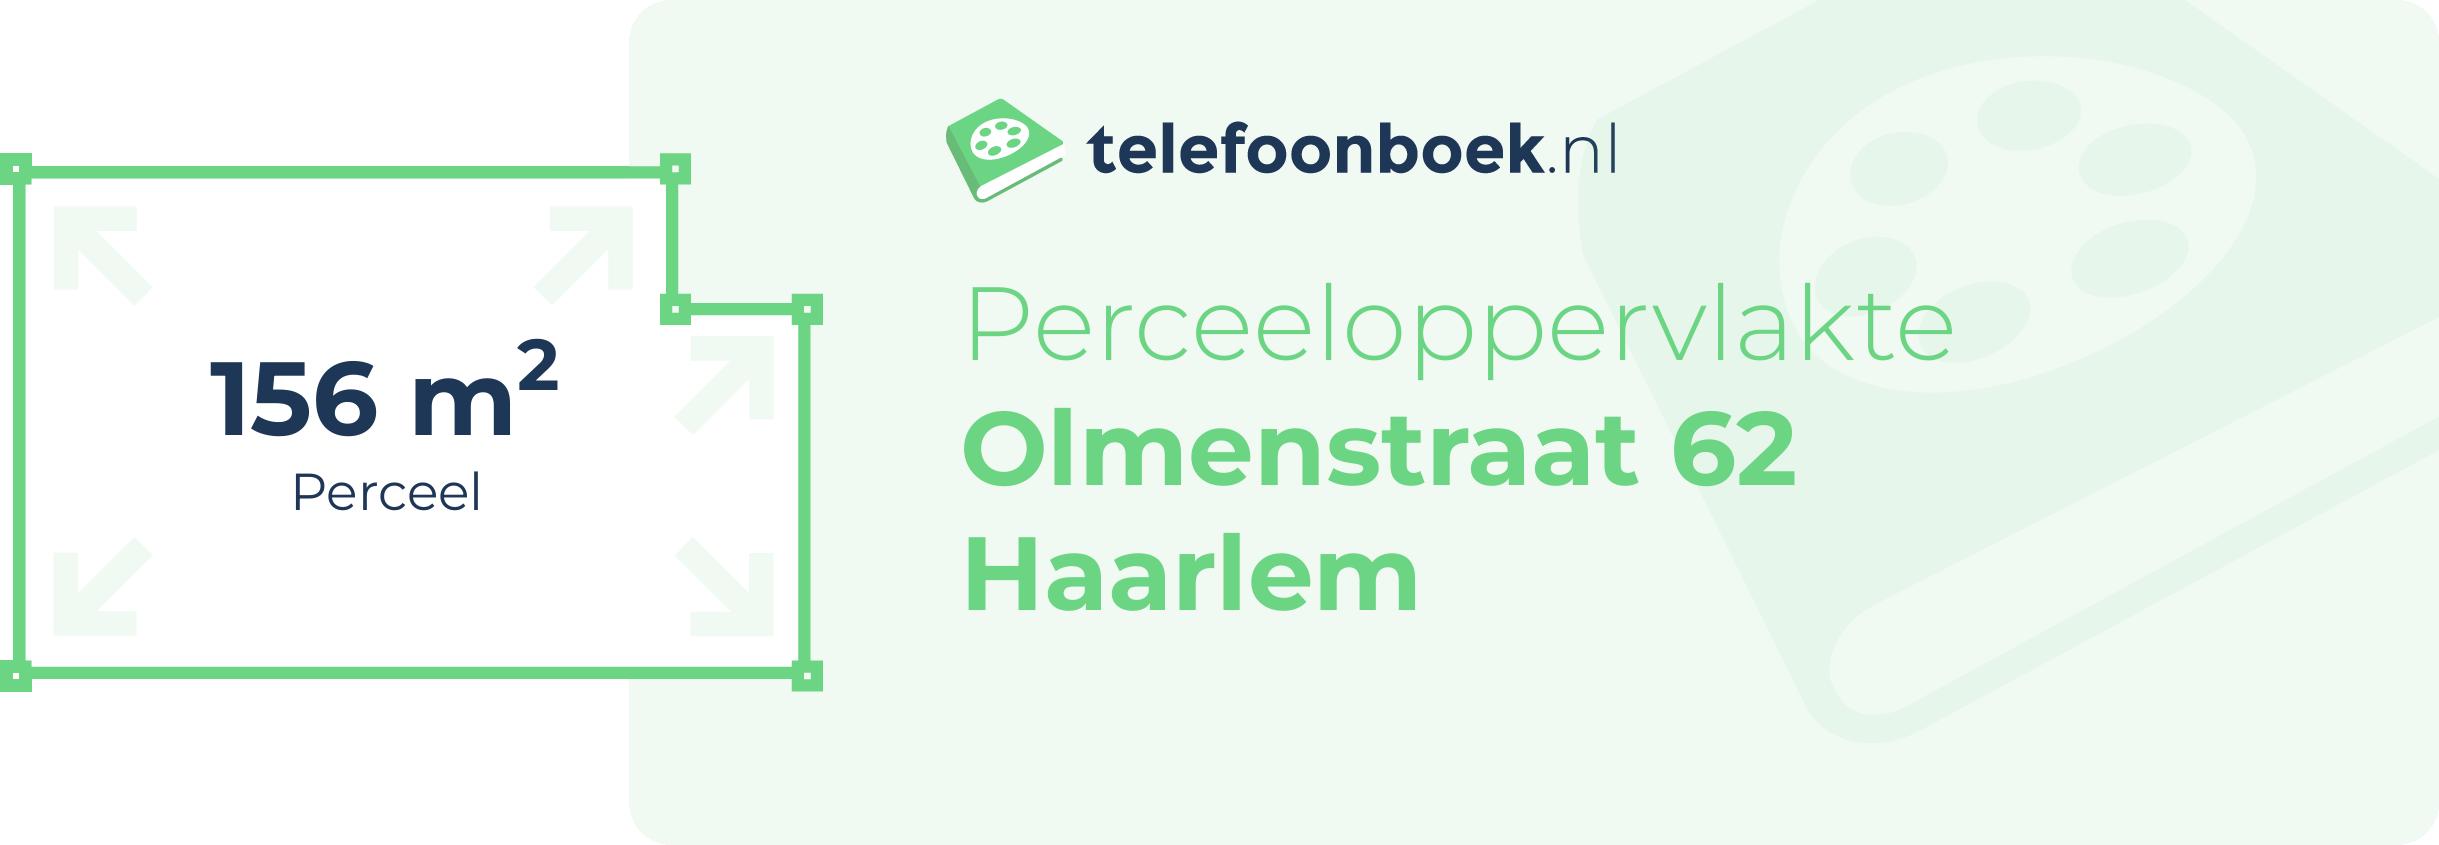 Perceeloppervlakte Olmenstraat 62 Haarlem